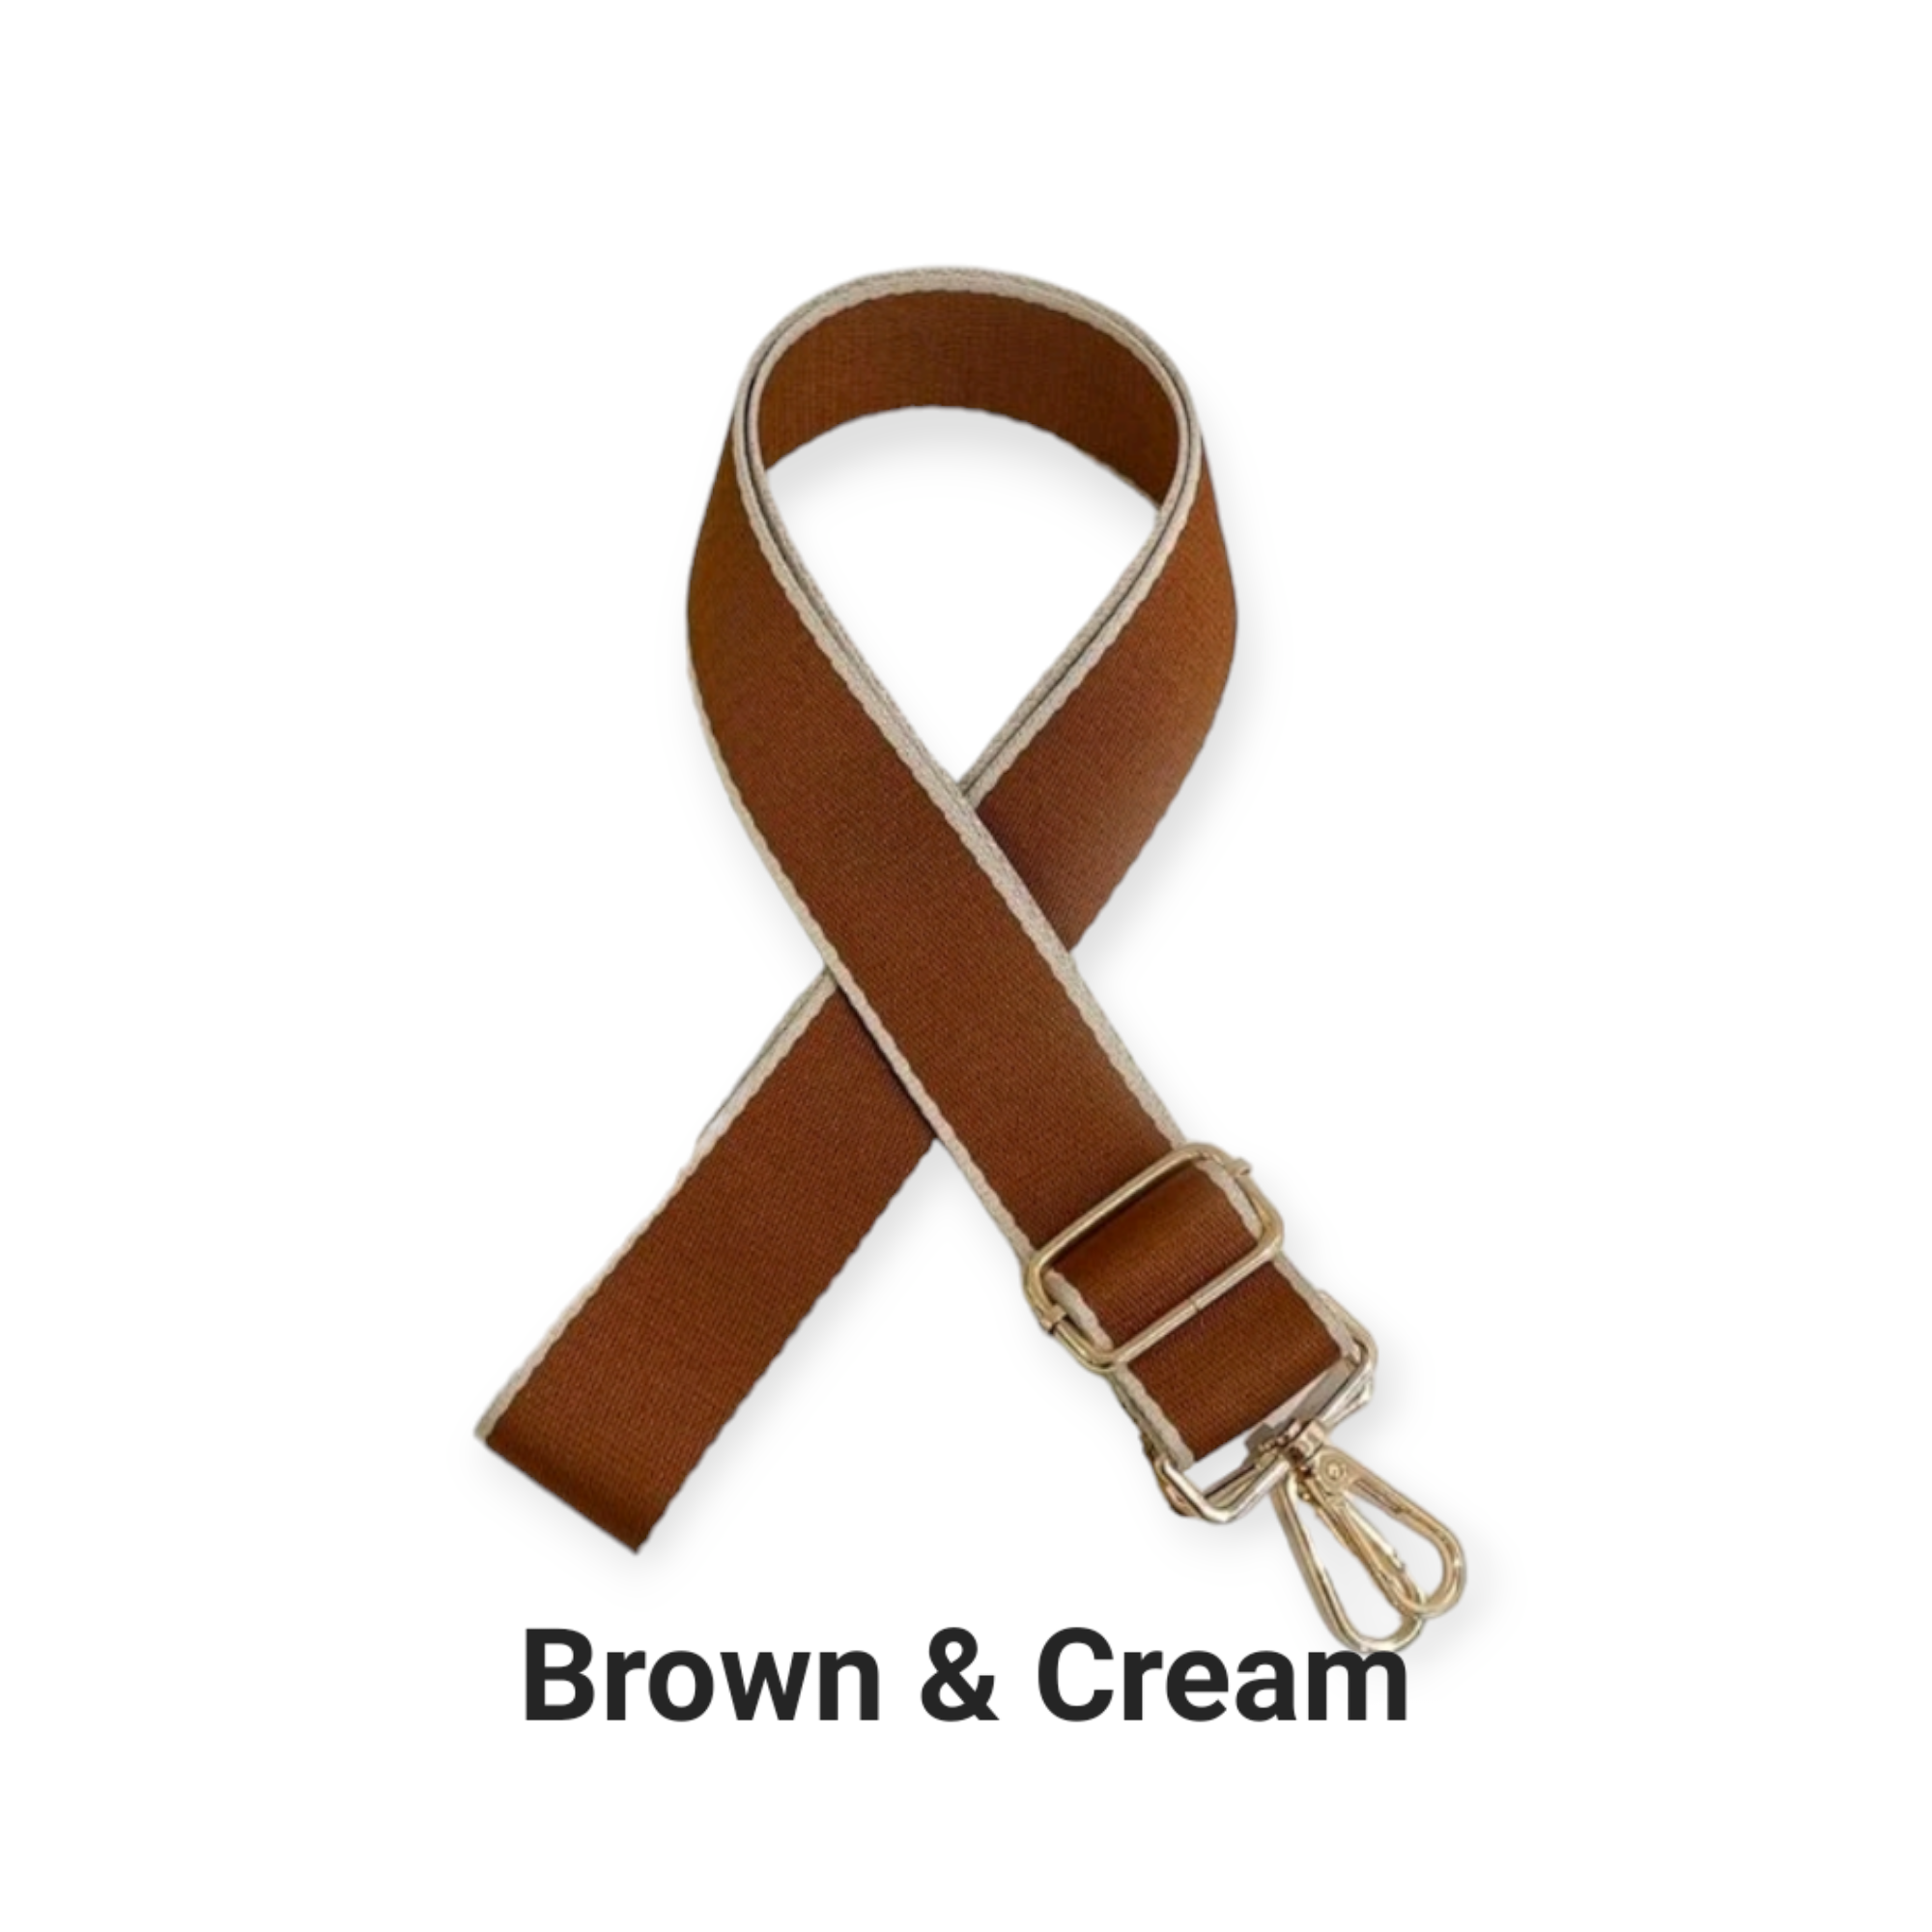 Brown & cream